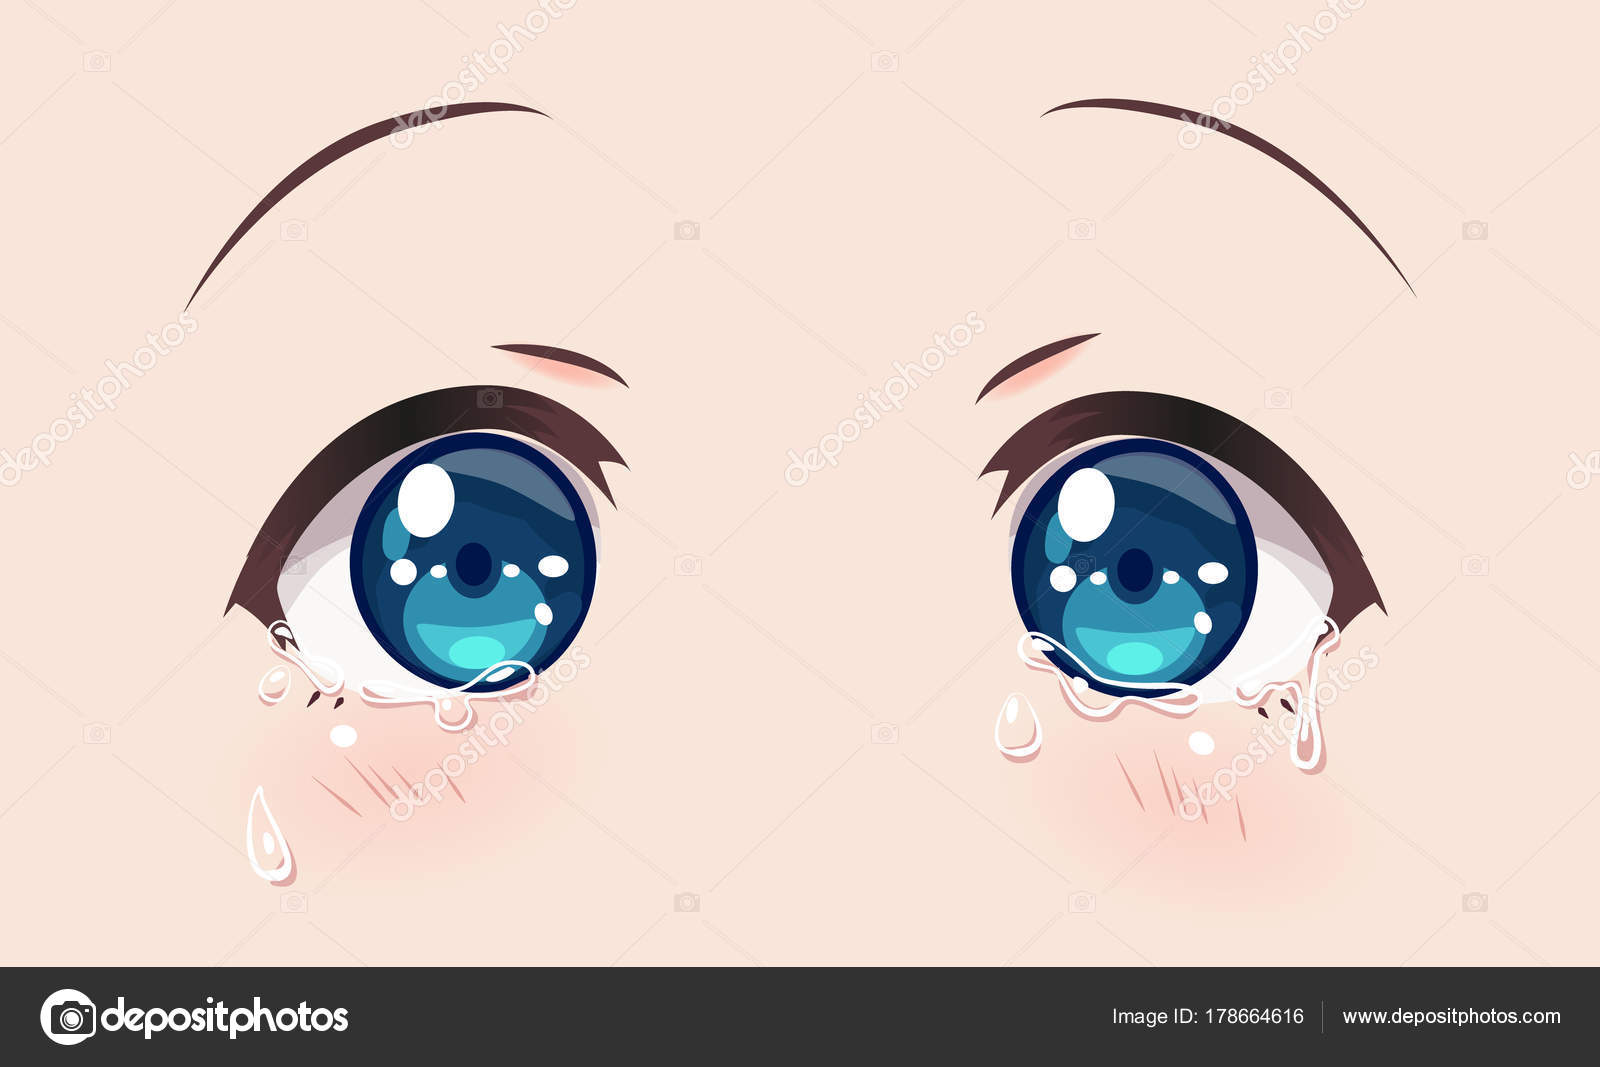 Llorando ojos de anime imágenes de stock de arte vectorial | Depositphotos